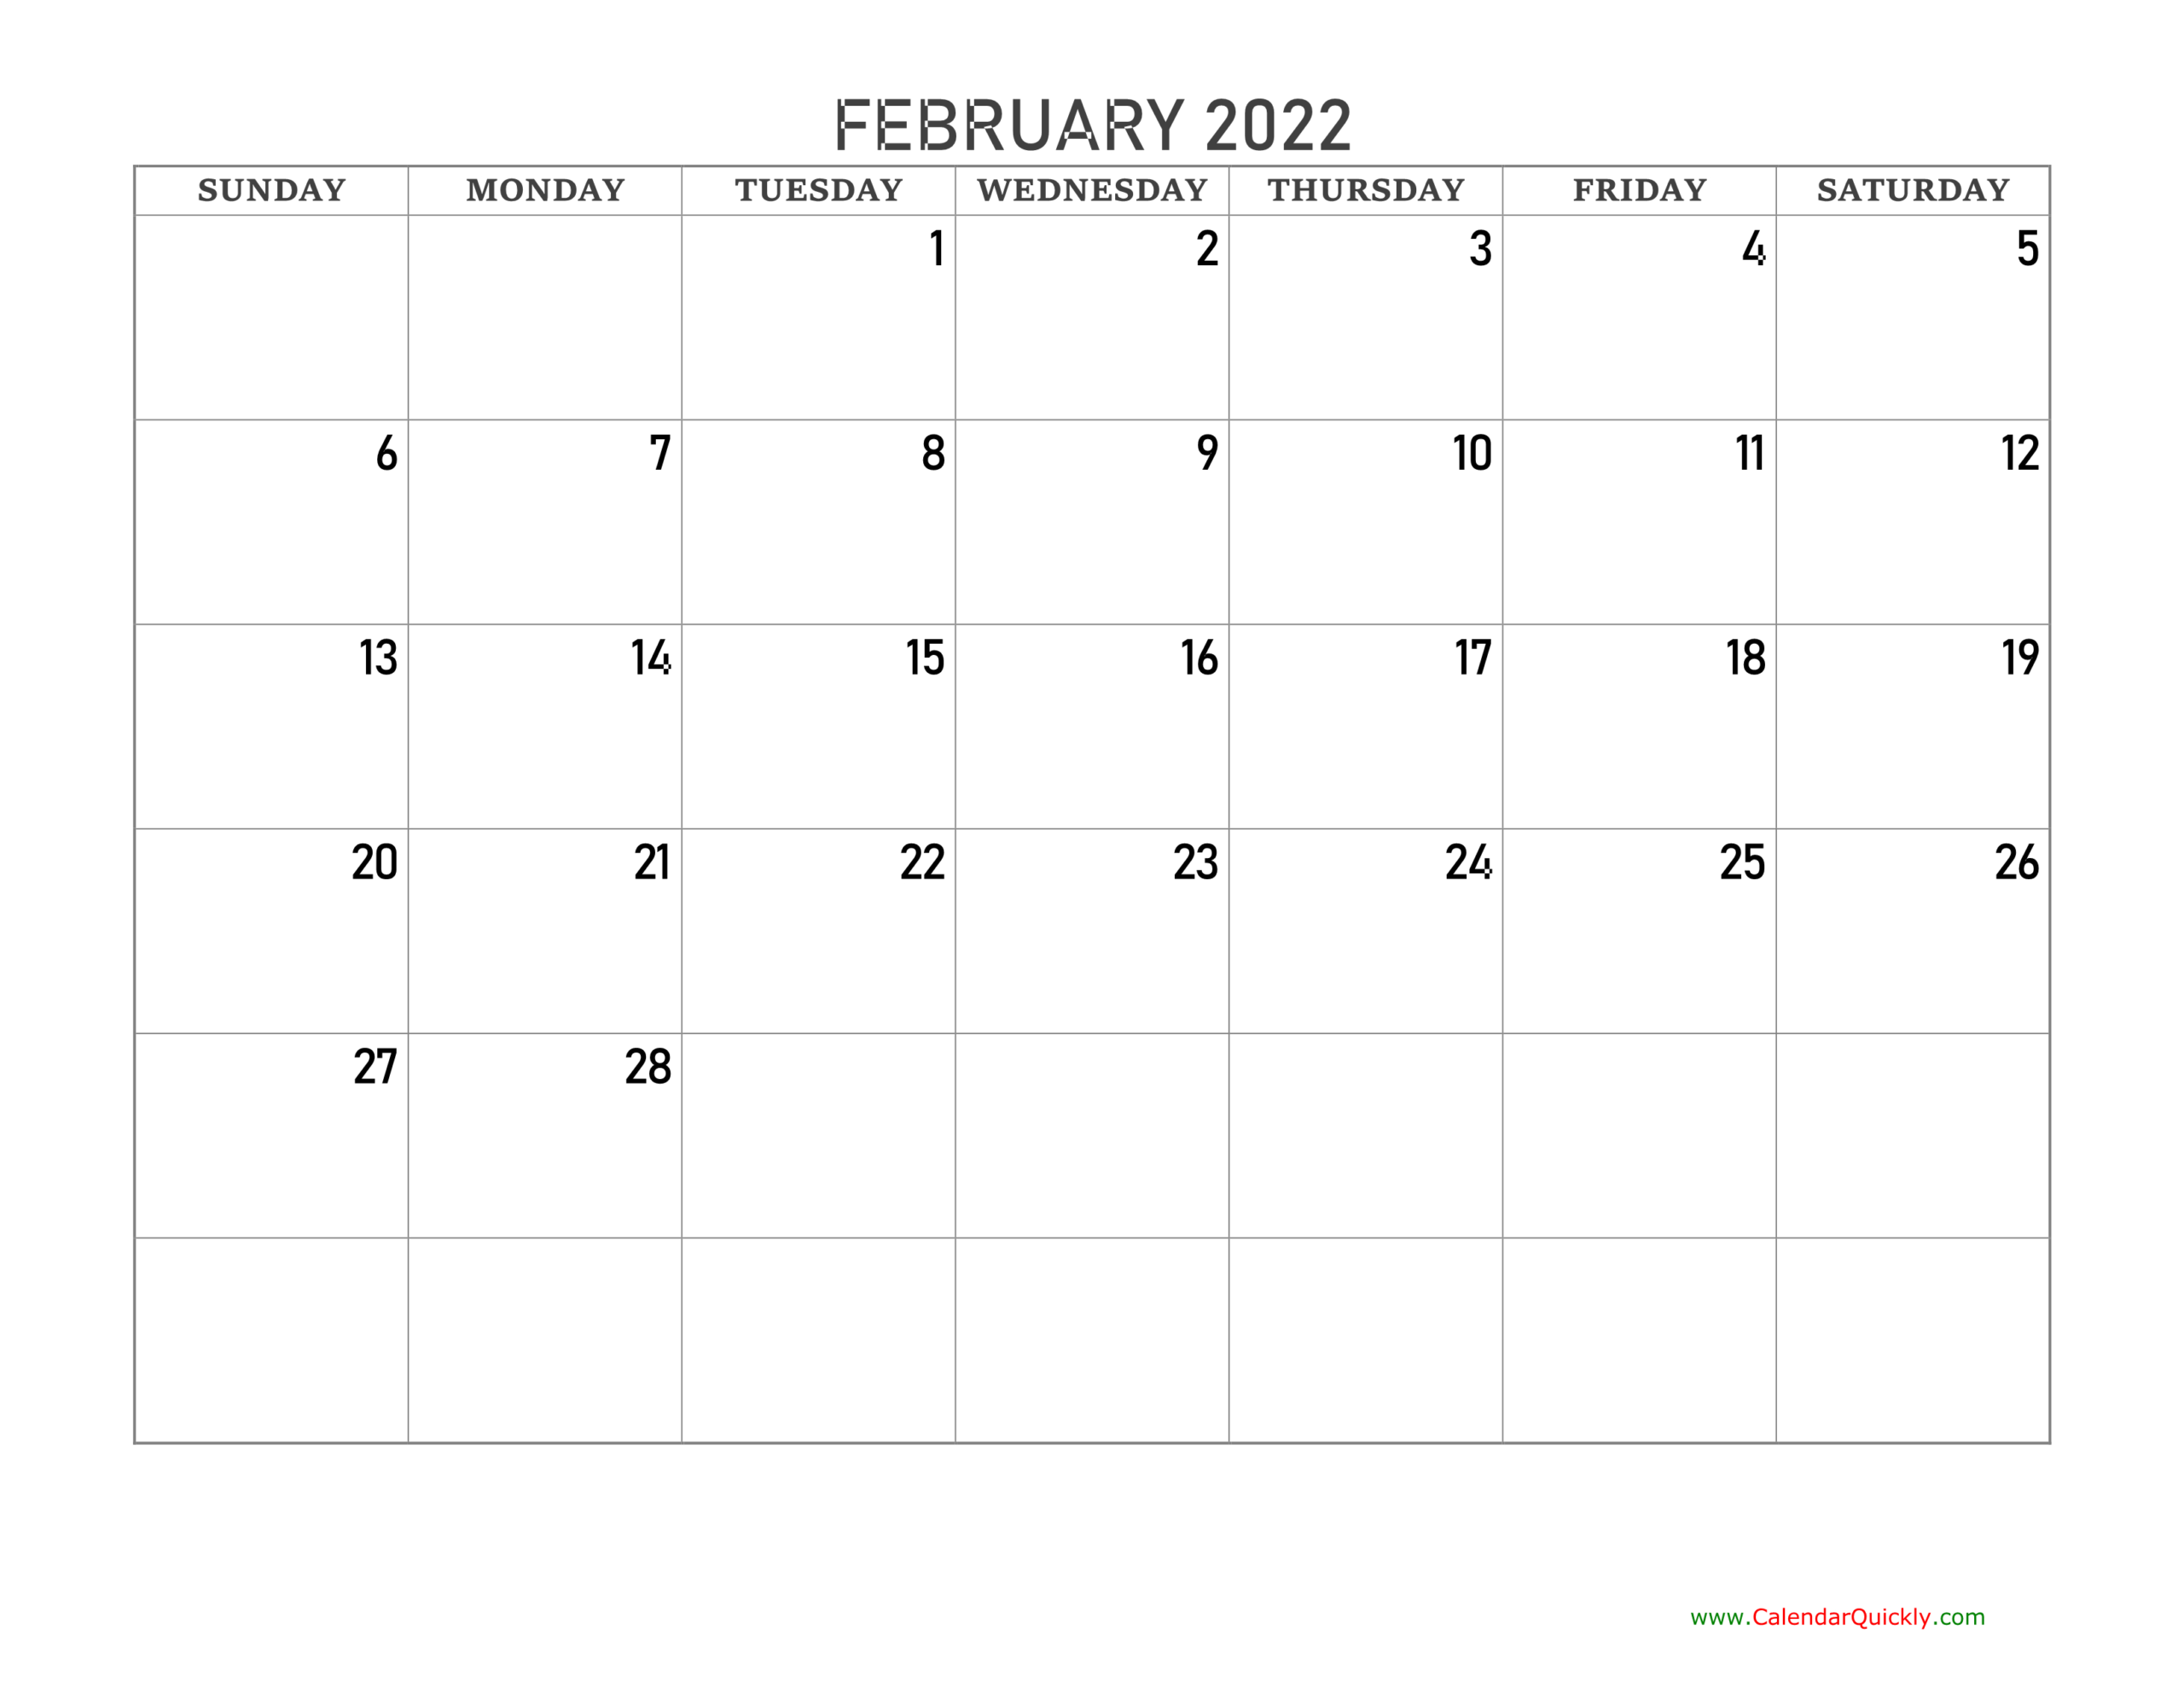 February 2022 Blank Calendar | Calendar Quickly  December 2022 January 2022 February 2022 Calendar